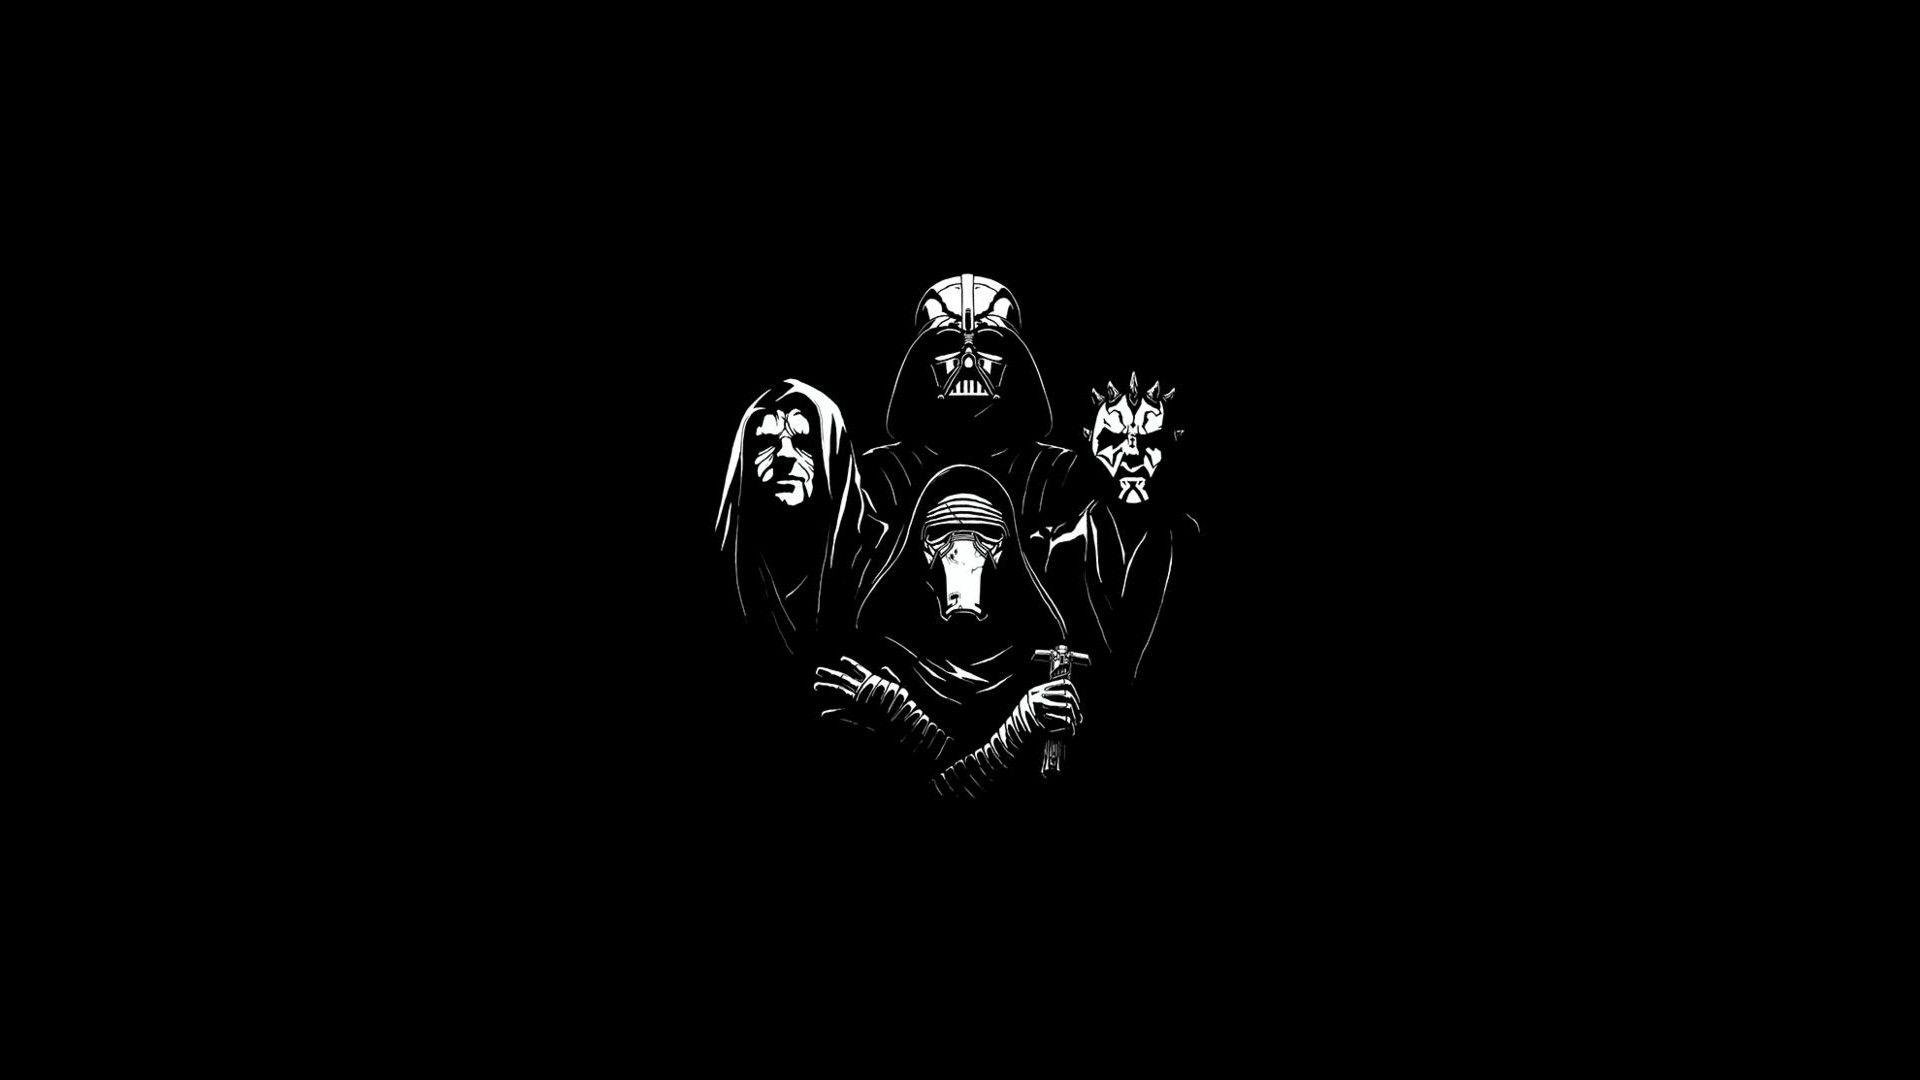 Darth Logo - Wallpaper : Star Wars, logo, Darth Vader, Kylo Ren, Queen, Darth